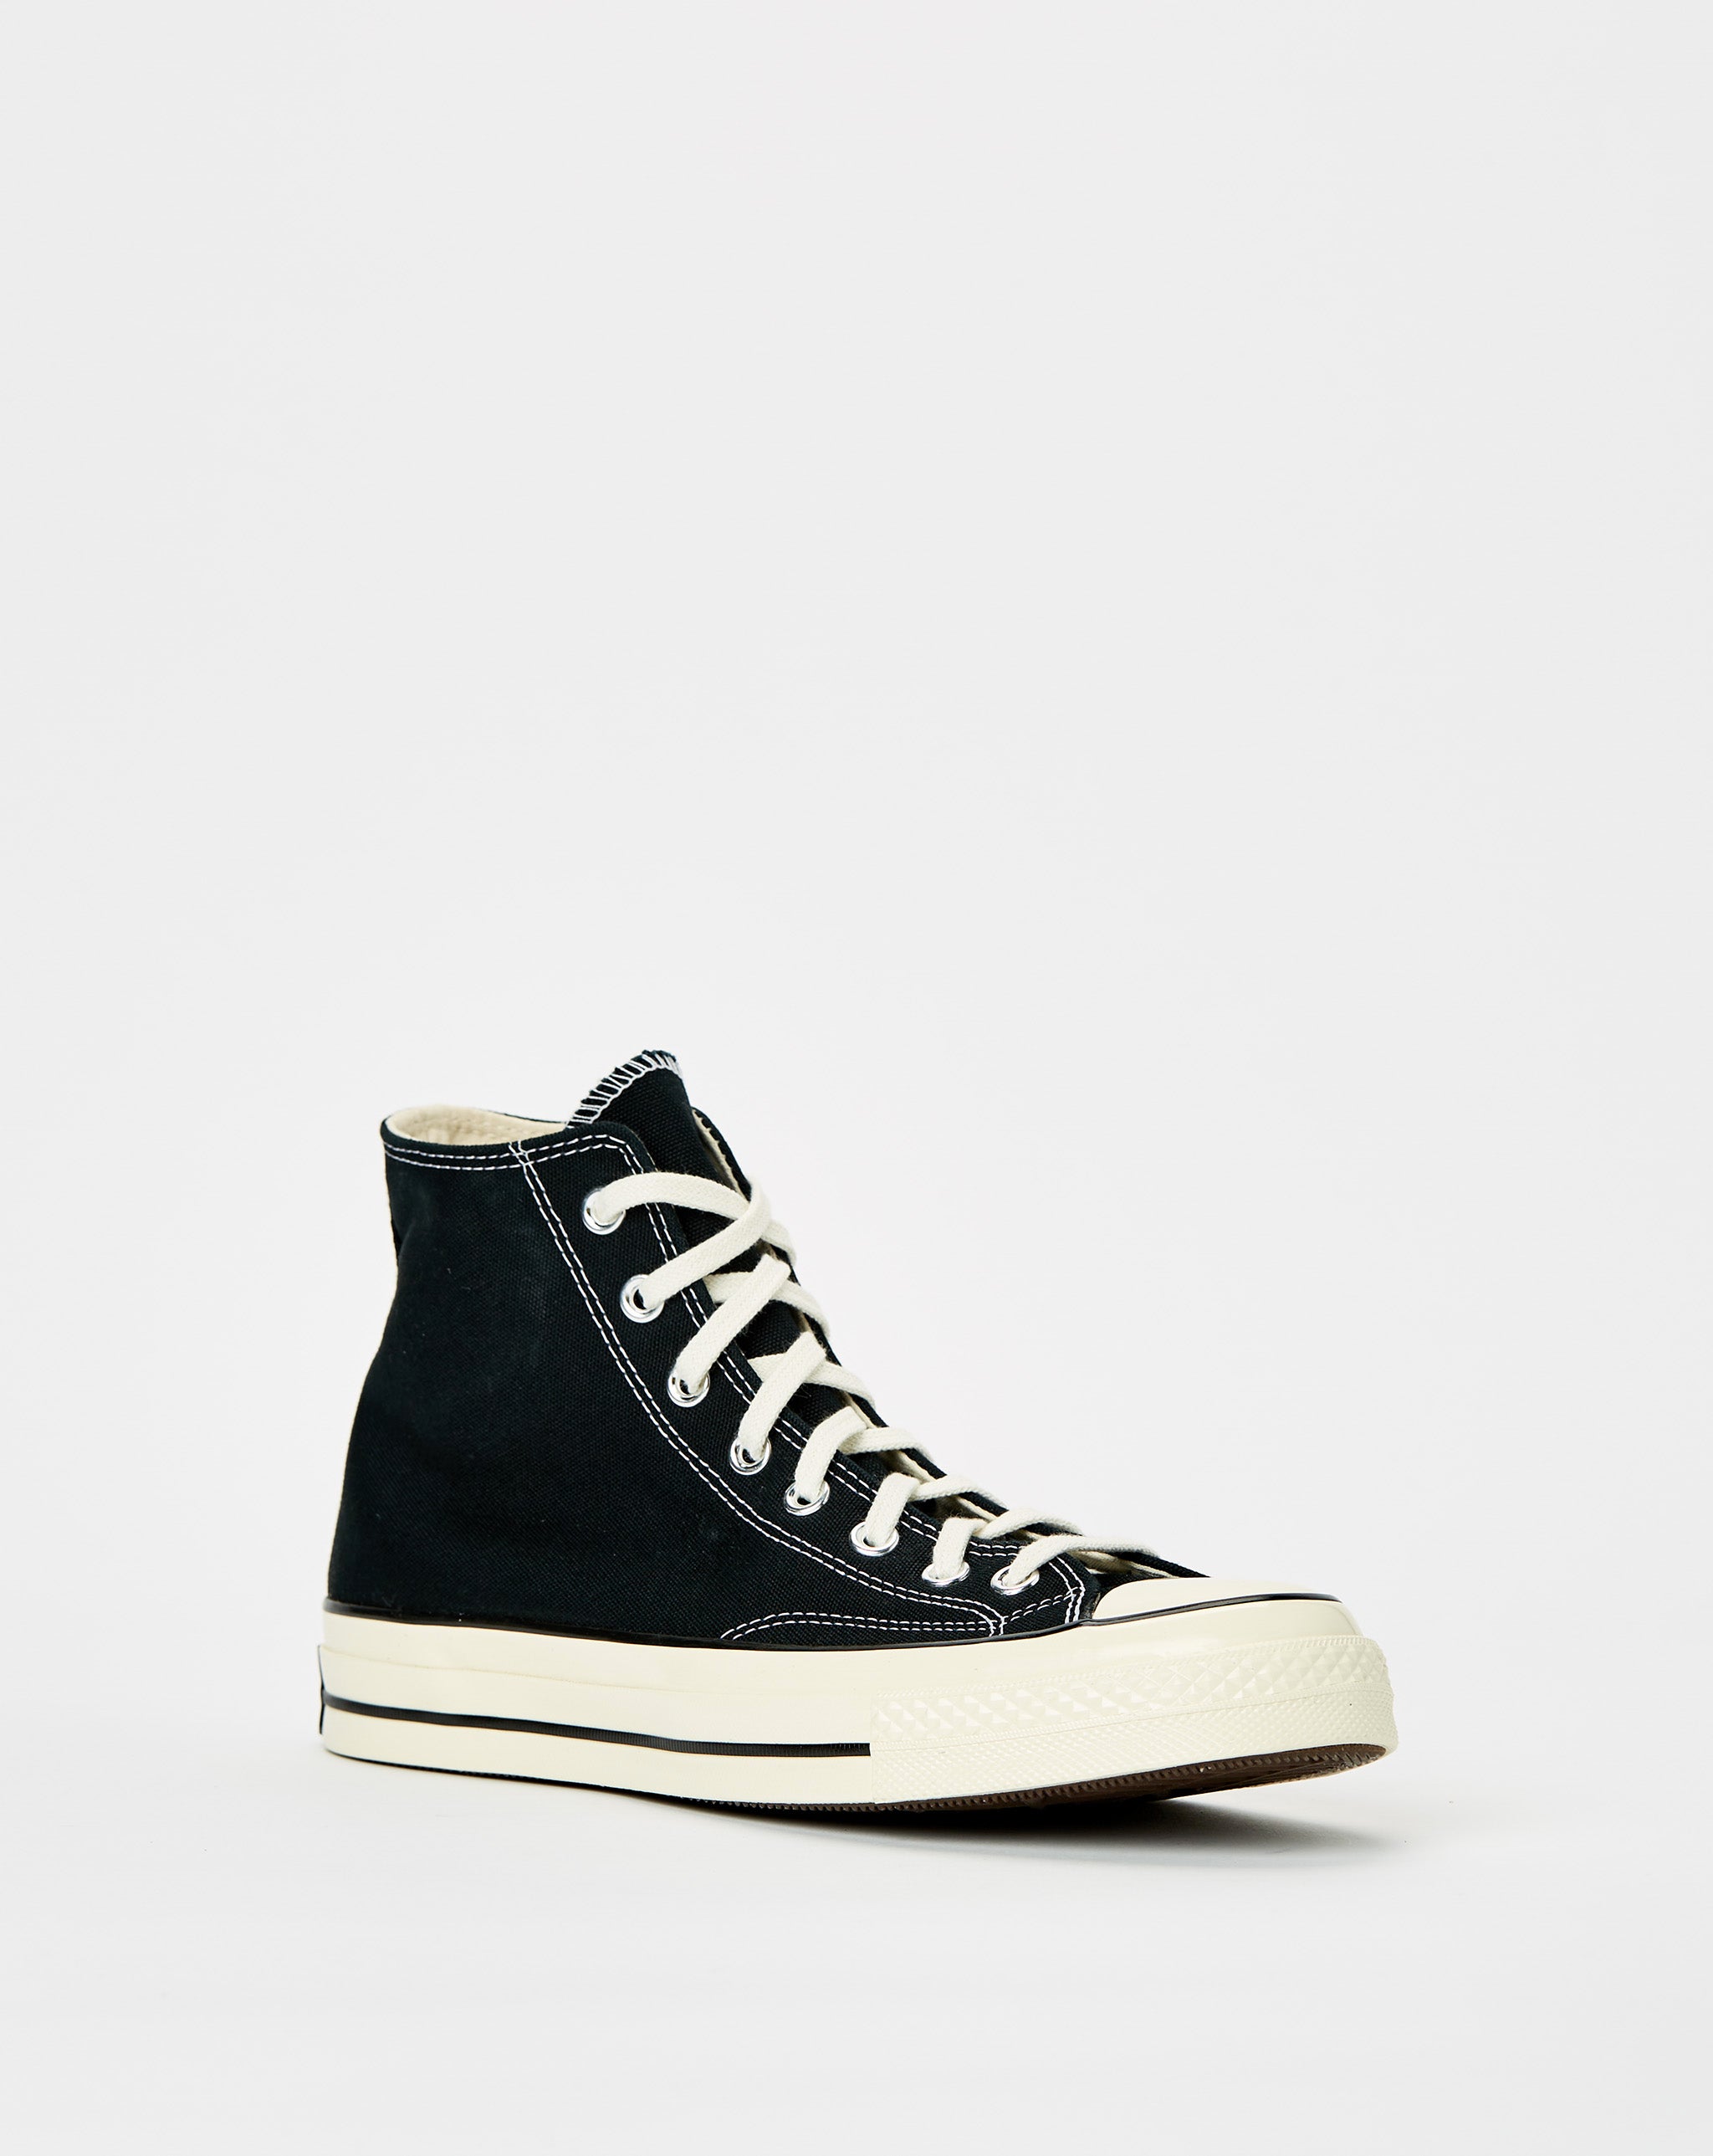 Converse Chuck 70 'Black' - Rule of Next Footwear